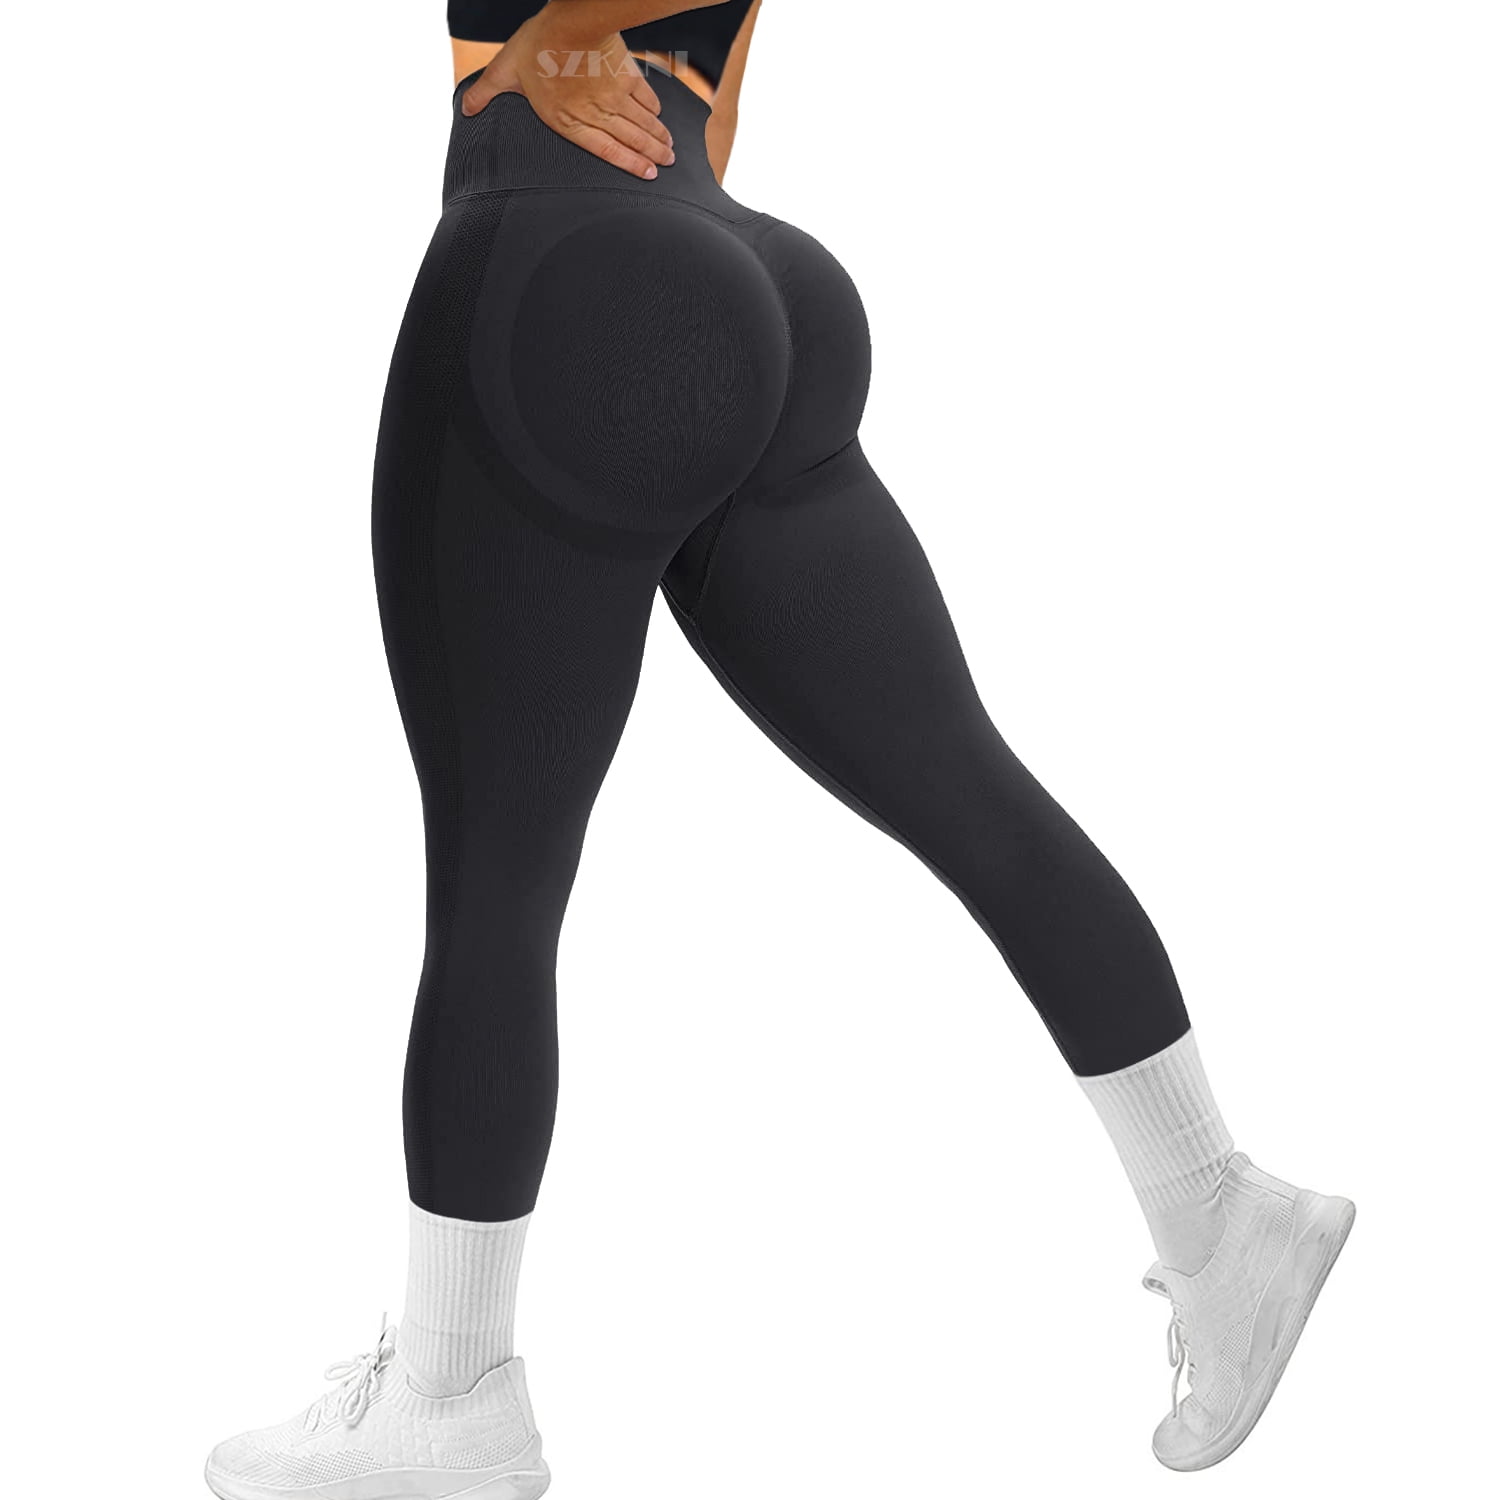 Walifrey Seamless Butt Lifting Leggings for Women Workout, High